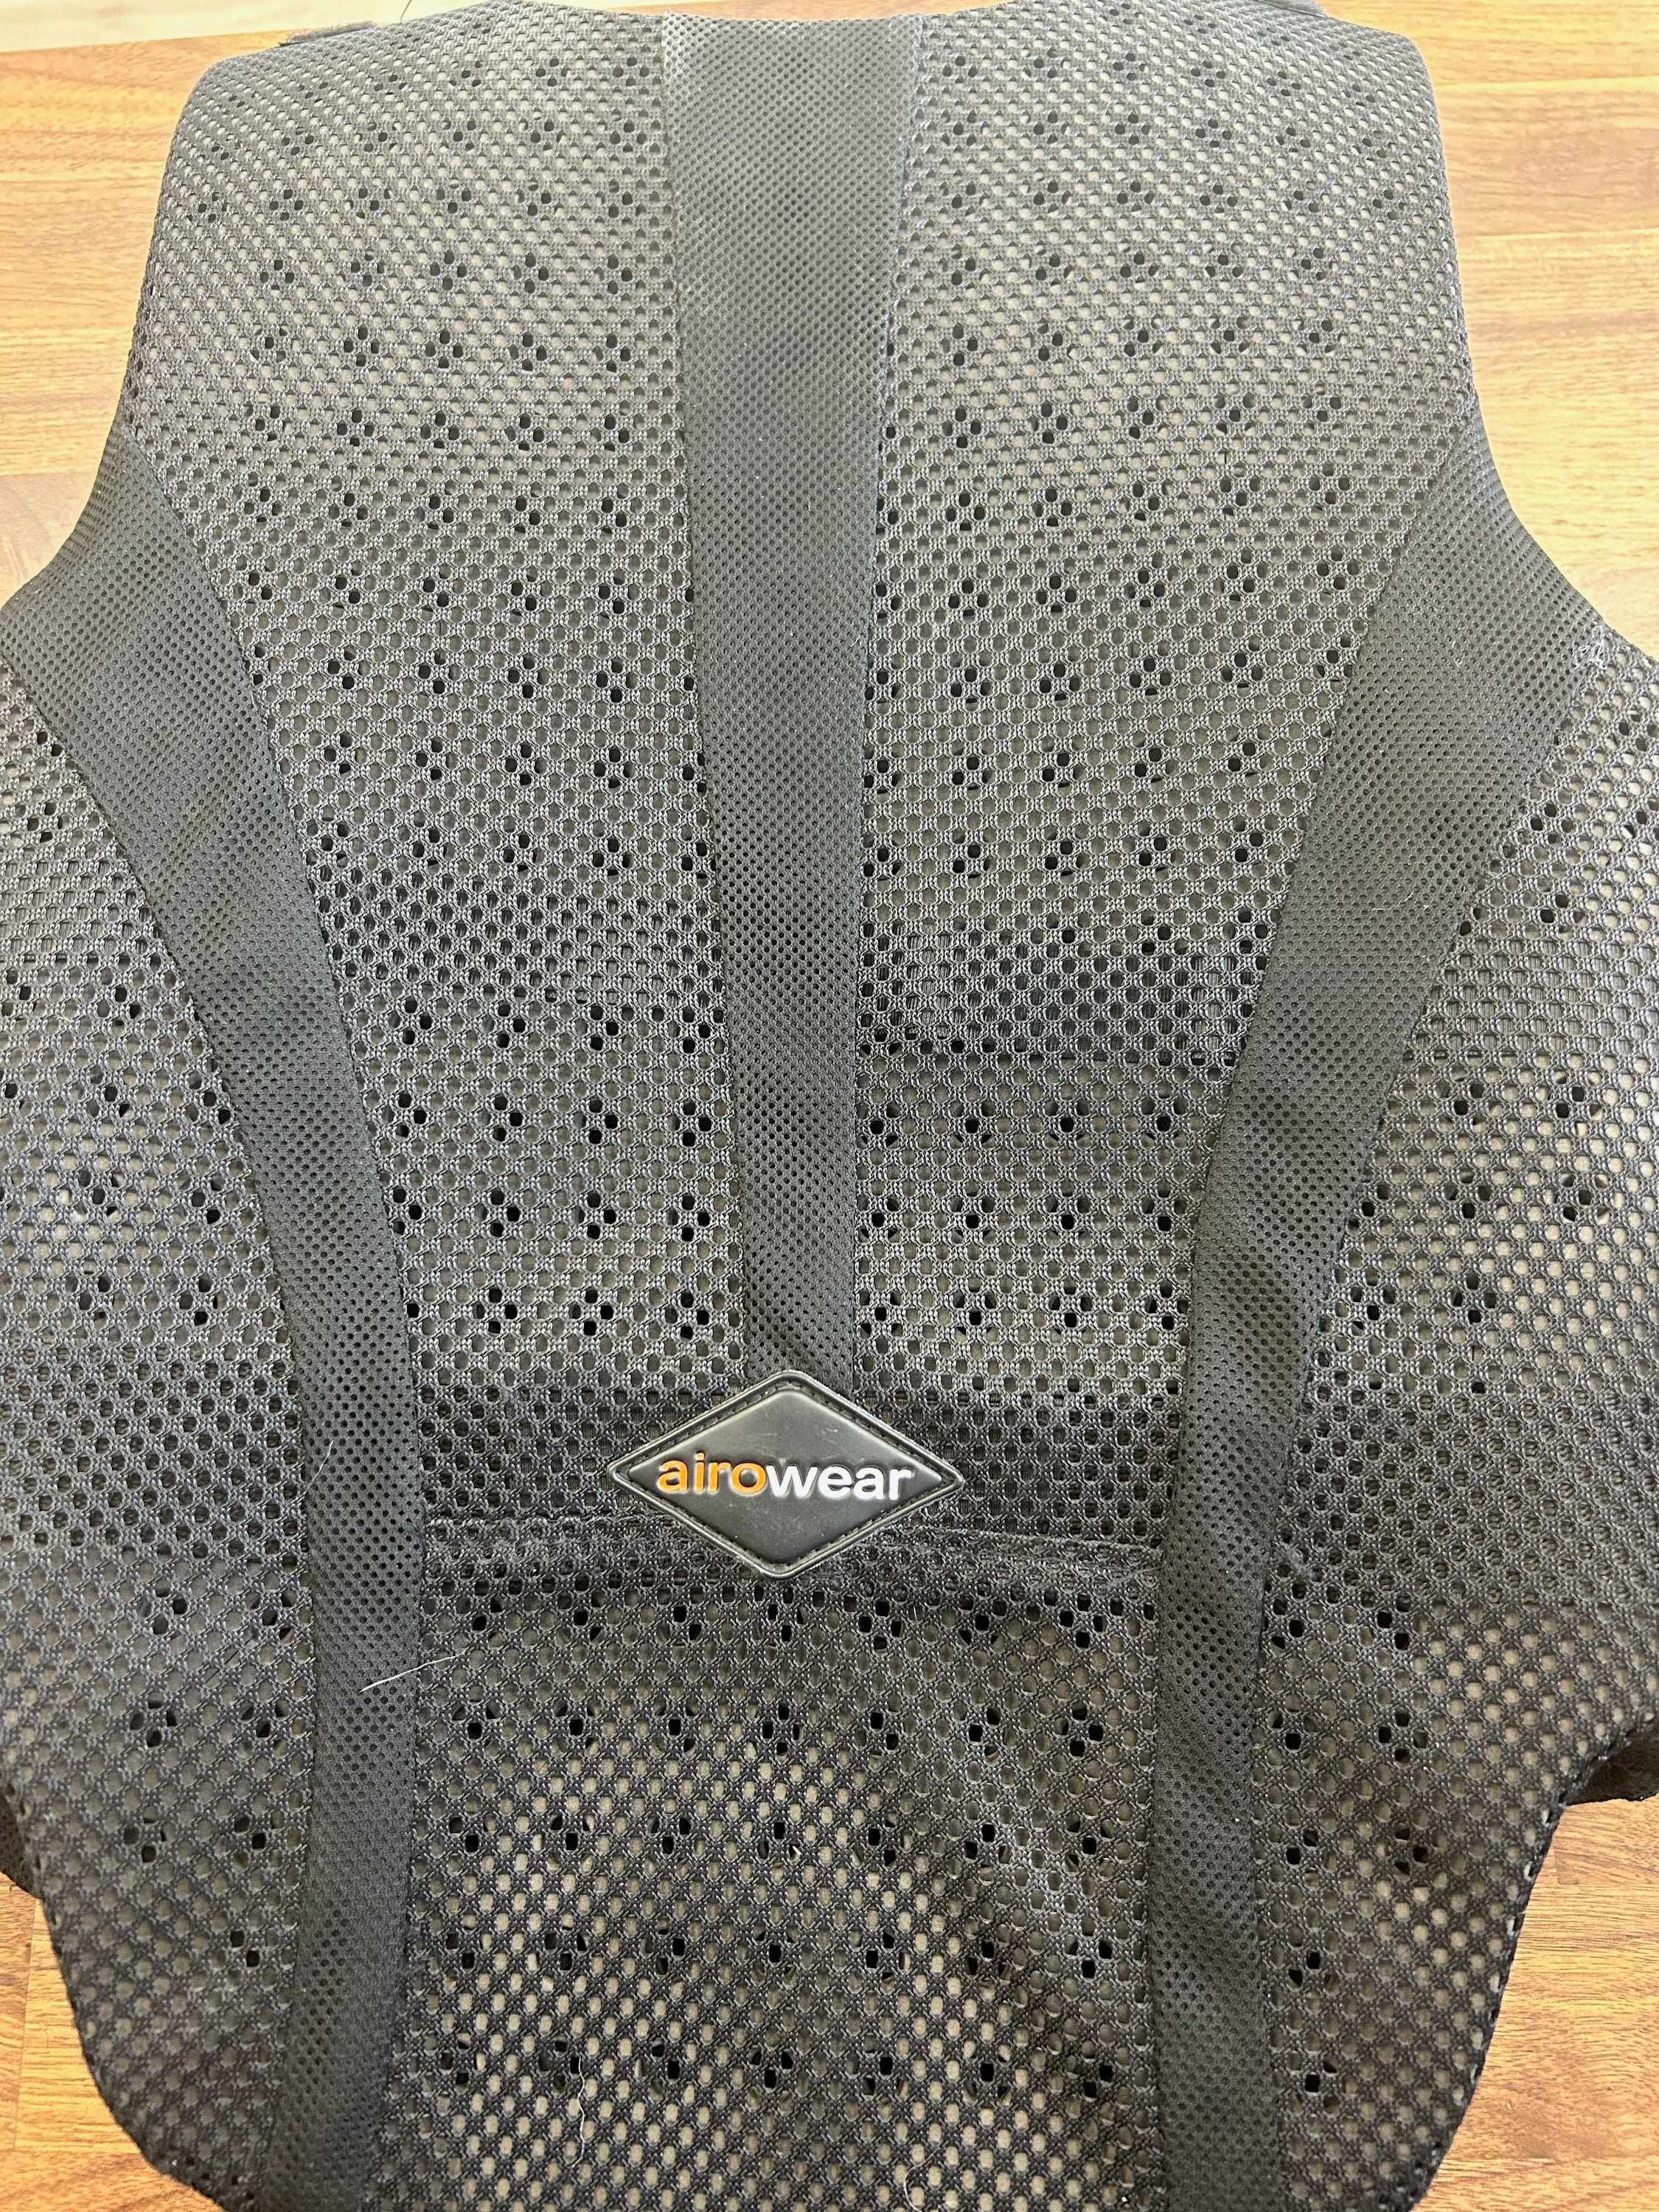 Fine Used Ladies Airowear Safety Vest - L4 Reg